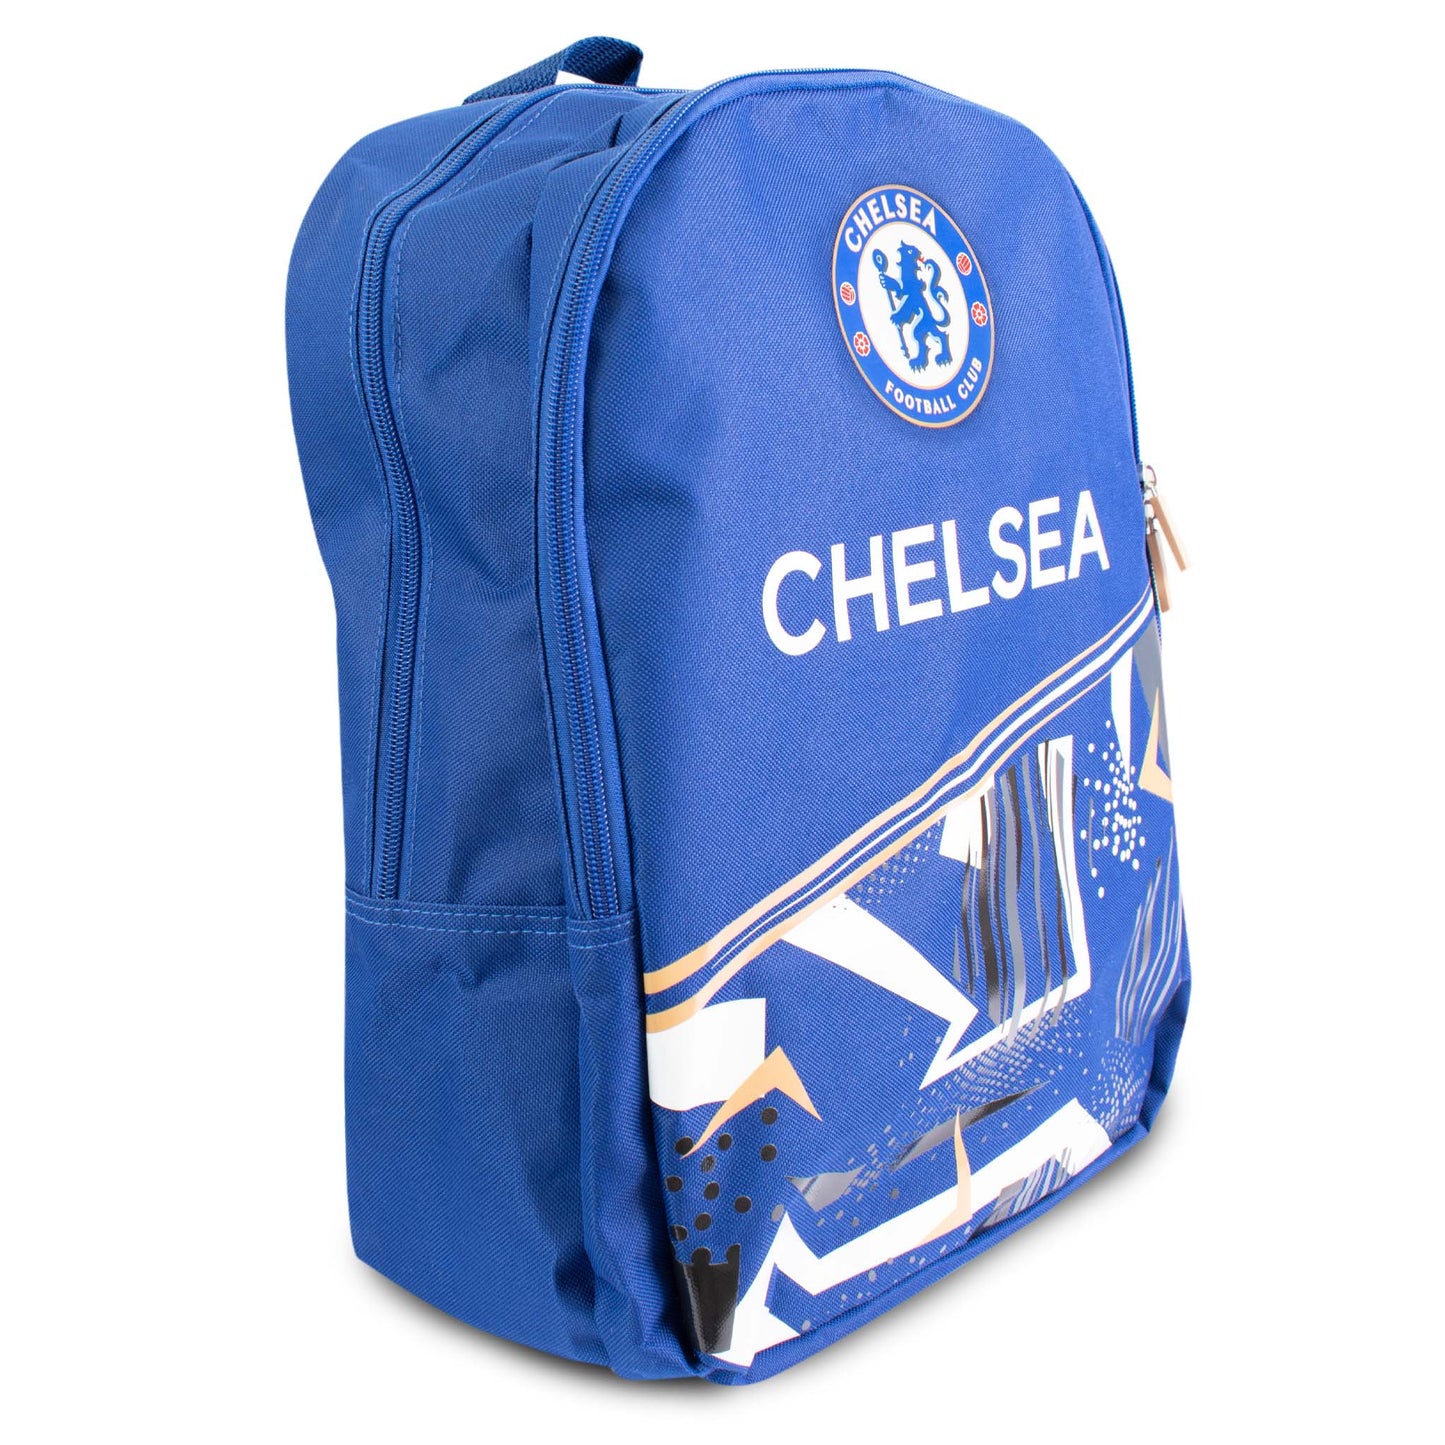 Chelsea F.C. Storm Backpack